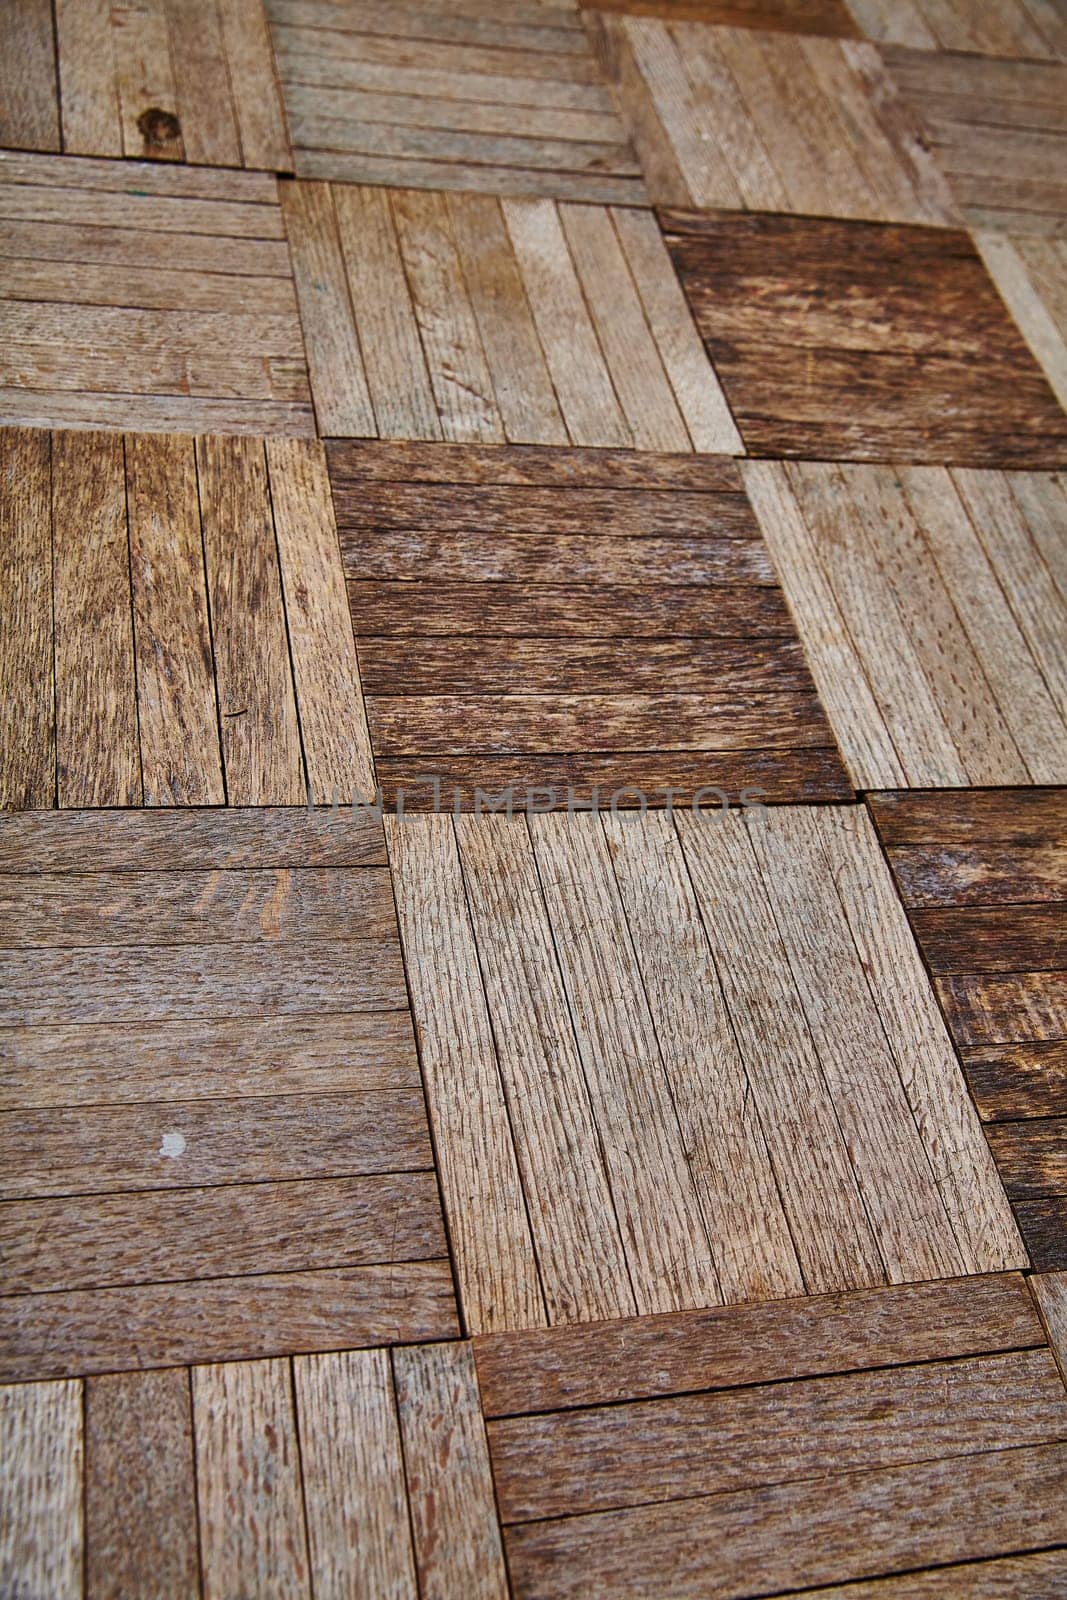 View of Rustic Herringbone Wood Flooring Texture in Warm Tones Close-Up by njproductions